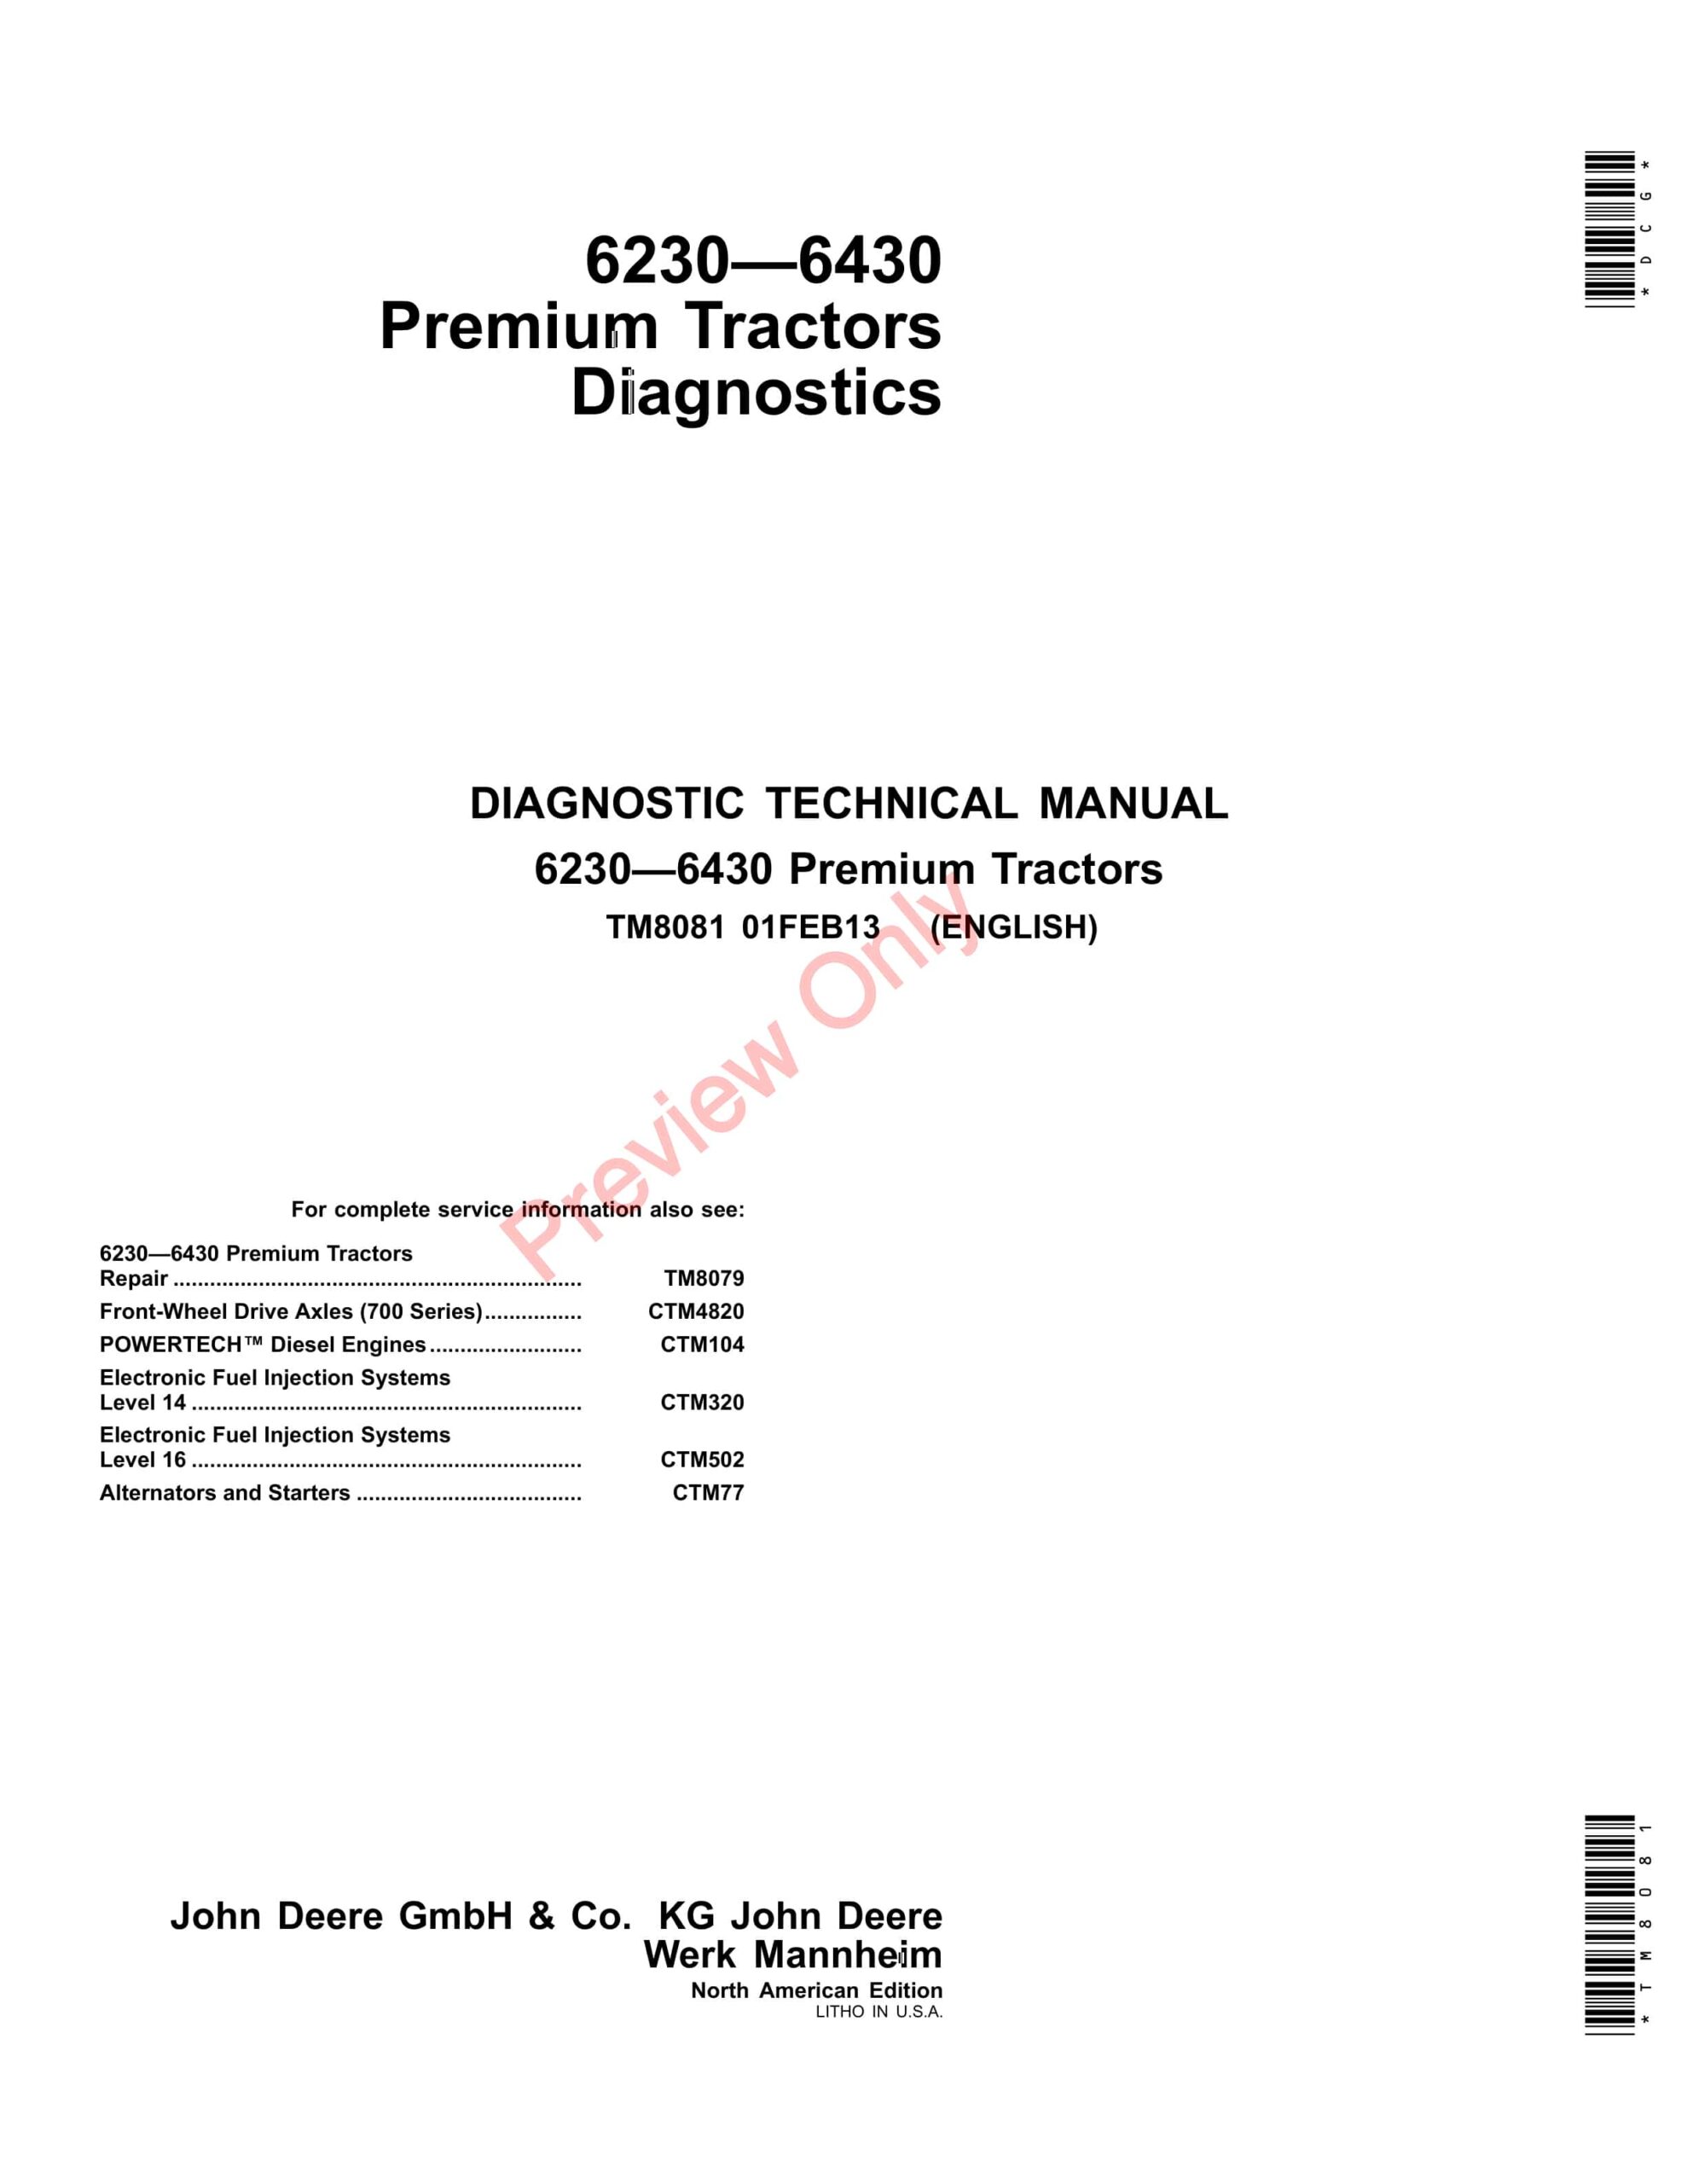 John Deere Premium Tractors 6230, 6330 and 6430 Technical Manual TM8081 01FEB13-1